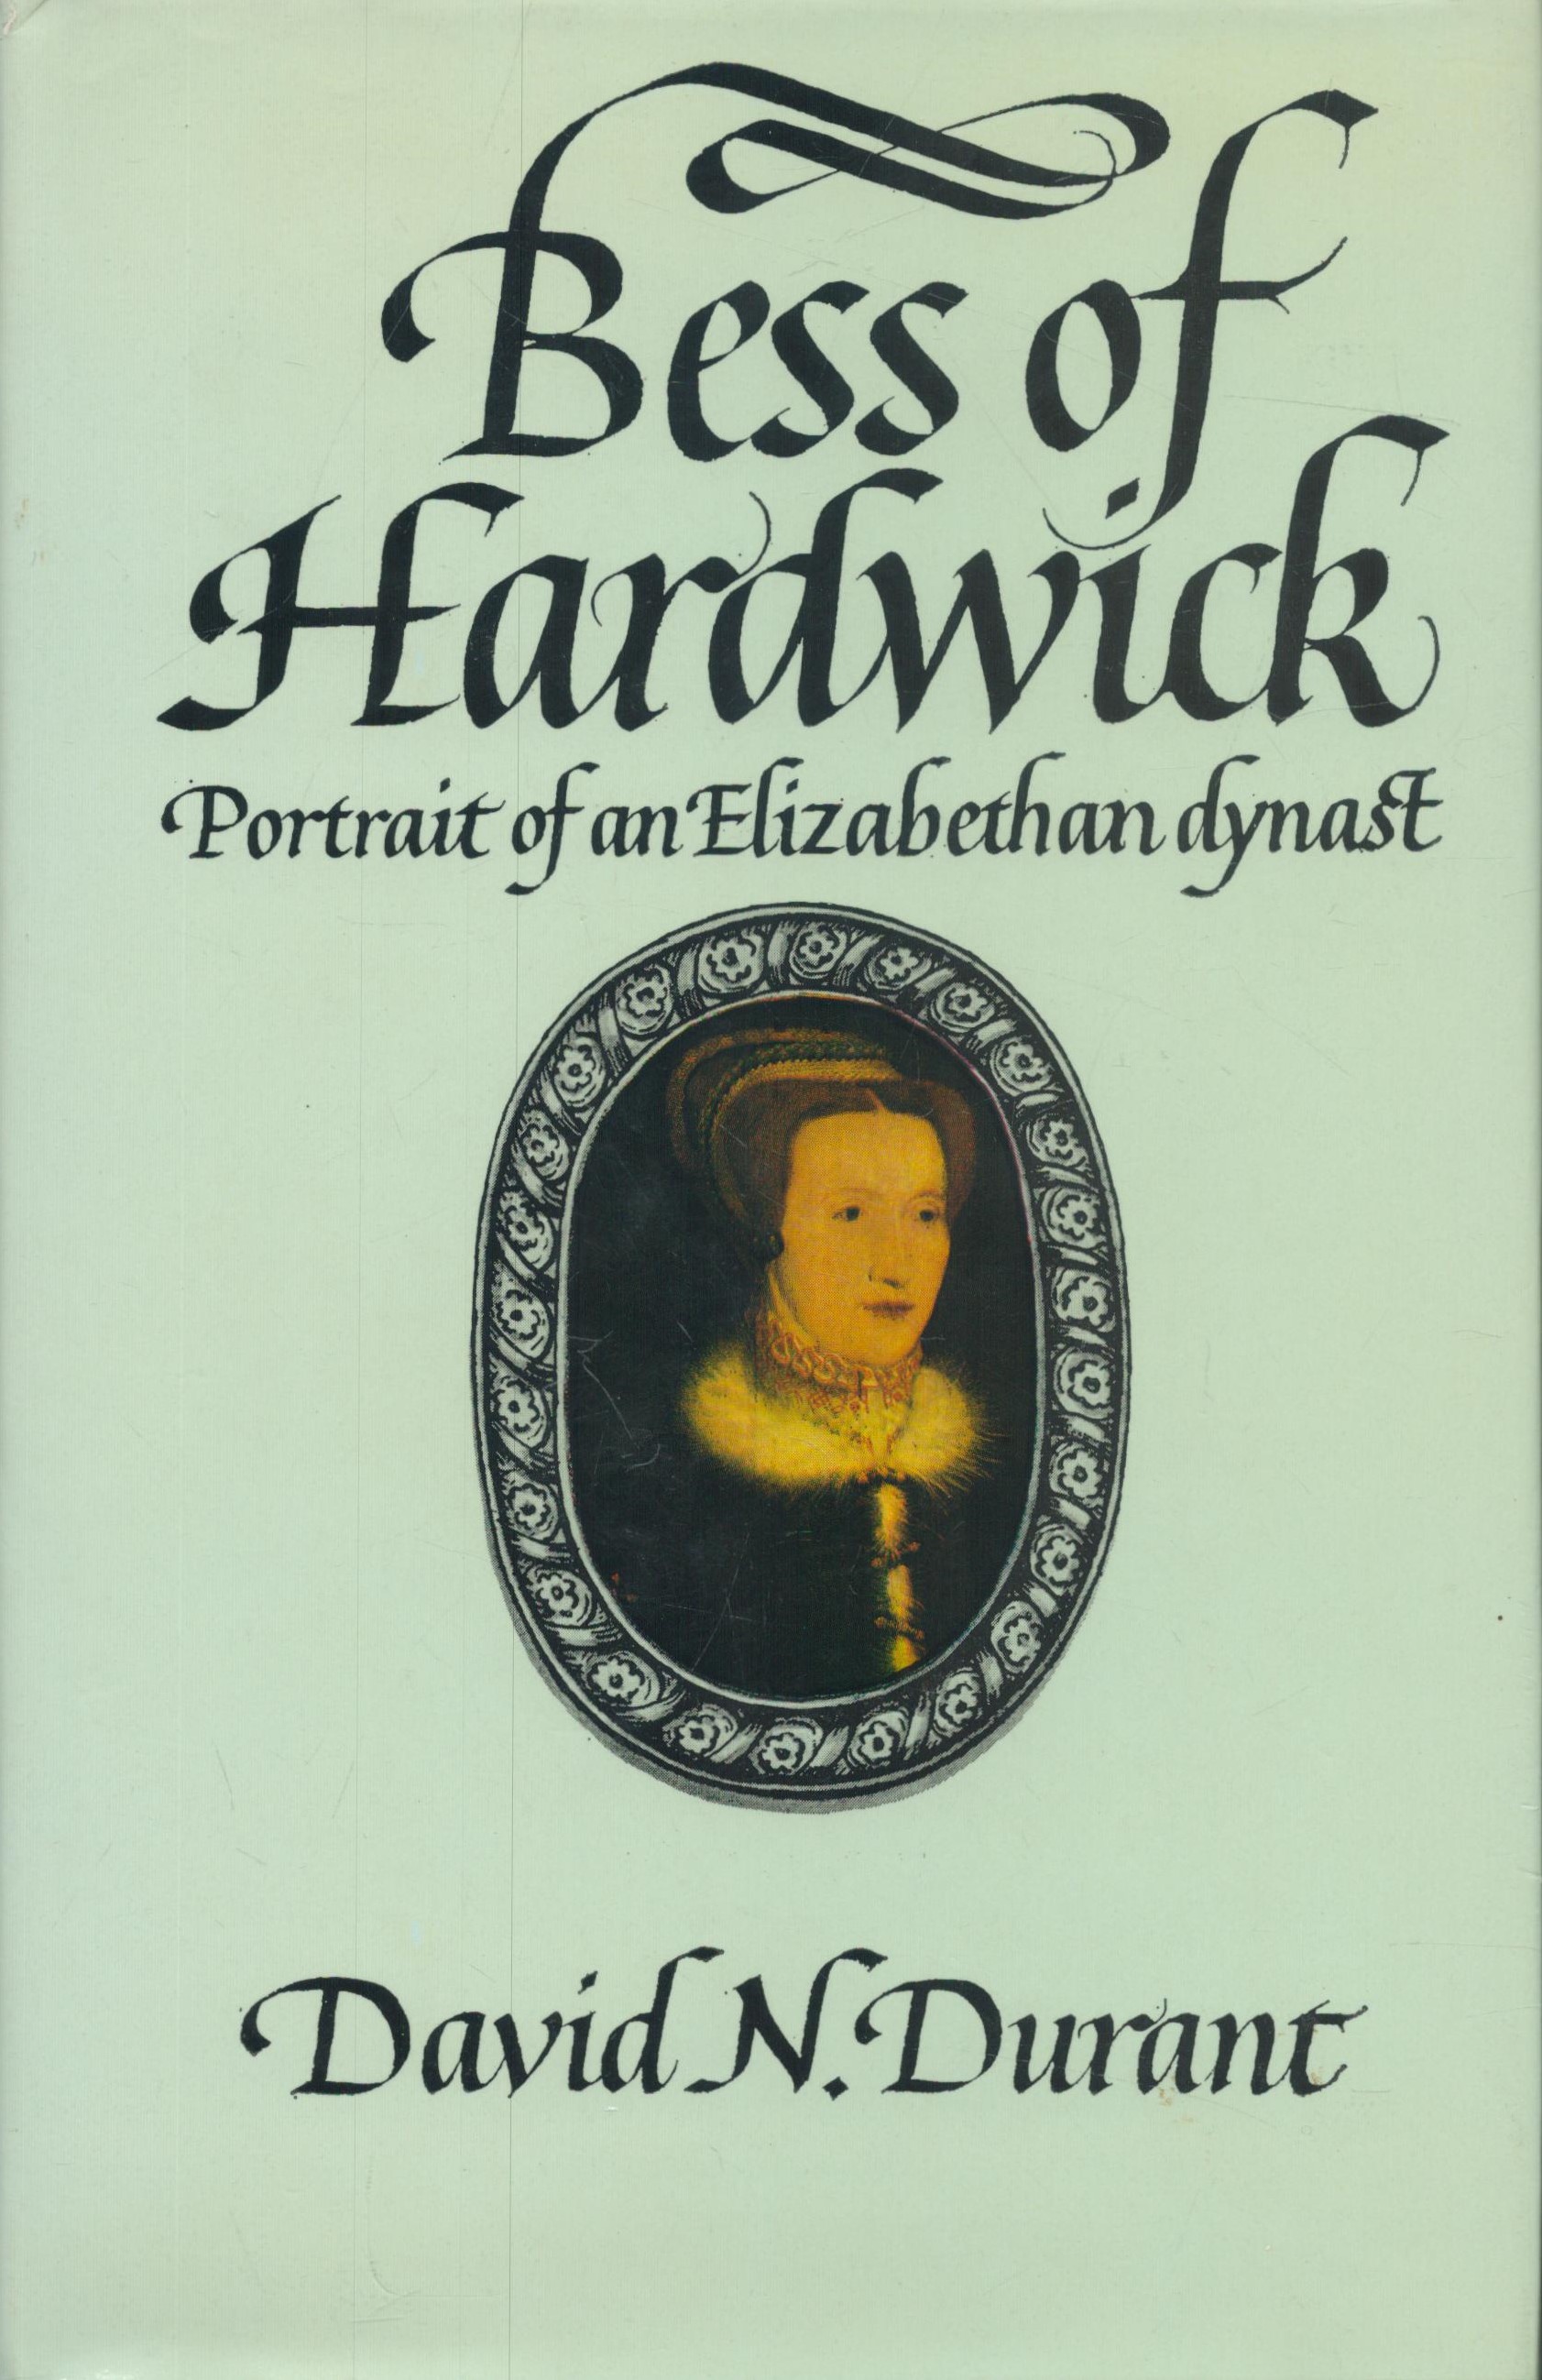 Bess of Hardwick - Portrait of an Elizabethan Dynast by David N Durant 1978 hardback book with 274